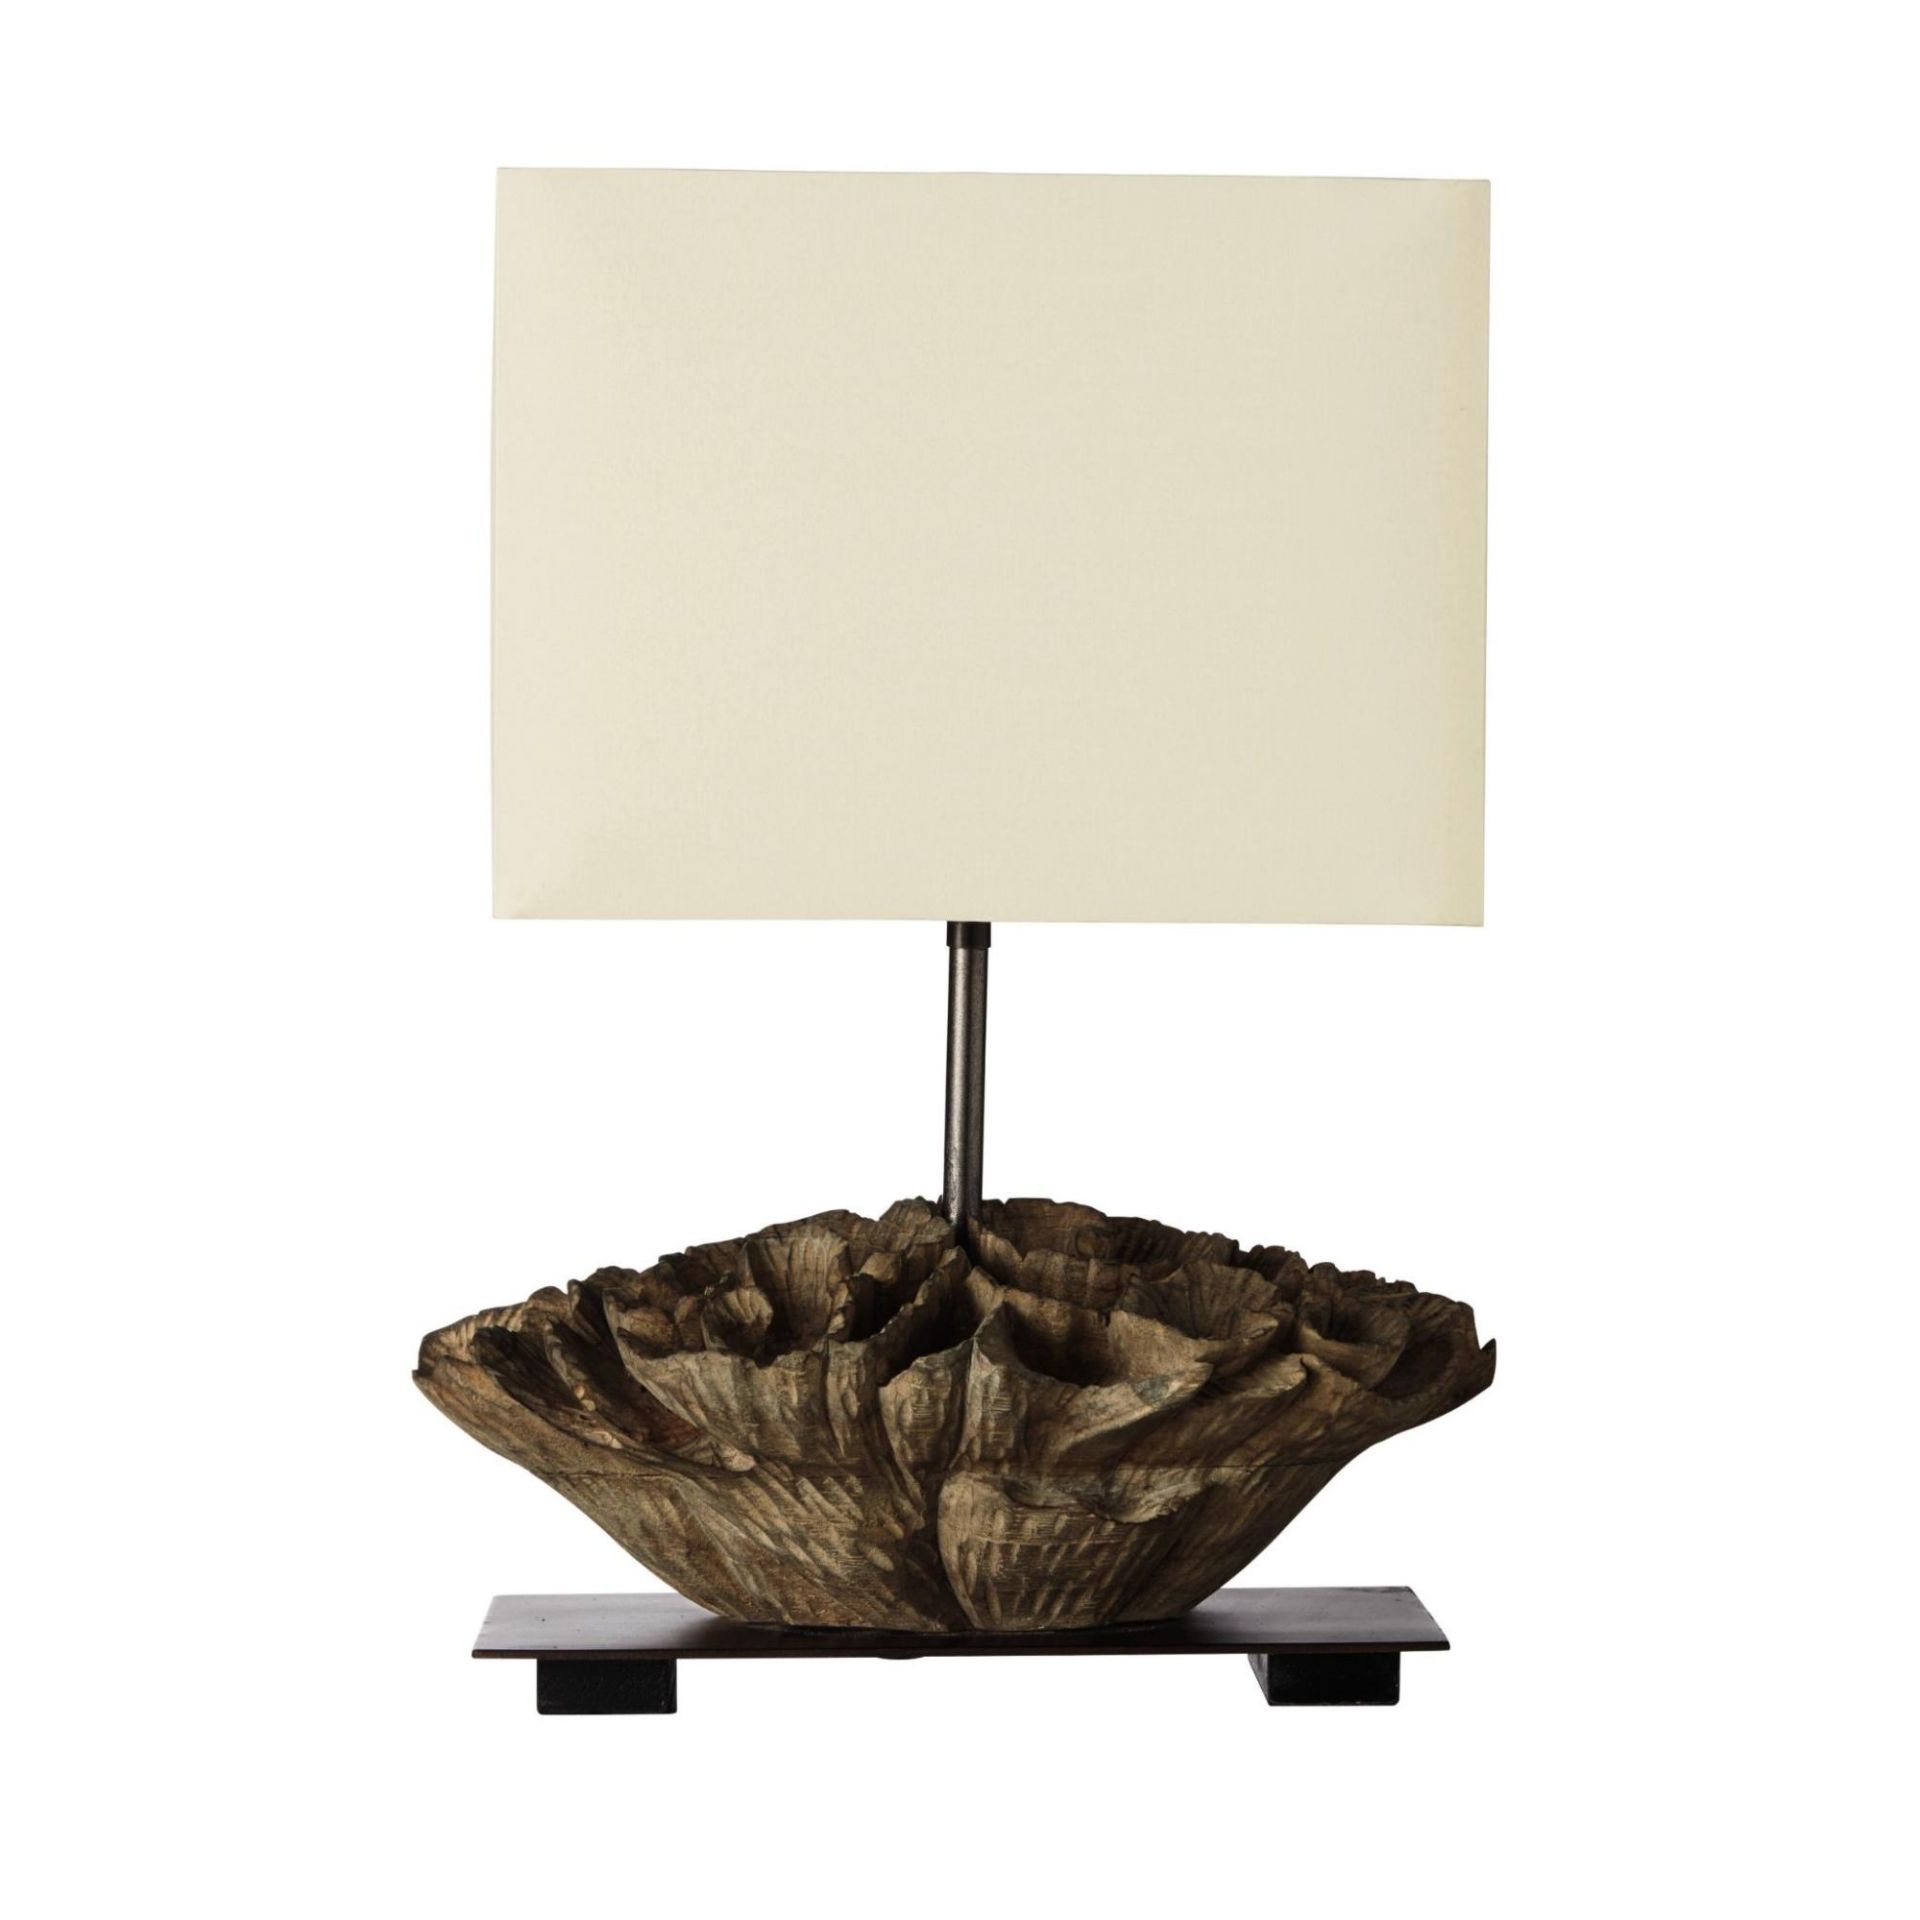 OKA Anthozoa Table Lamp Dimensions: Height - 31cm Width - 33cm Depth - 22cm Please note: this item